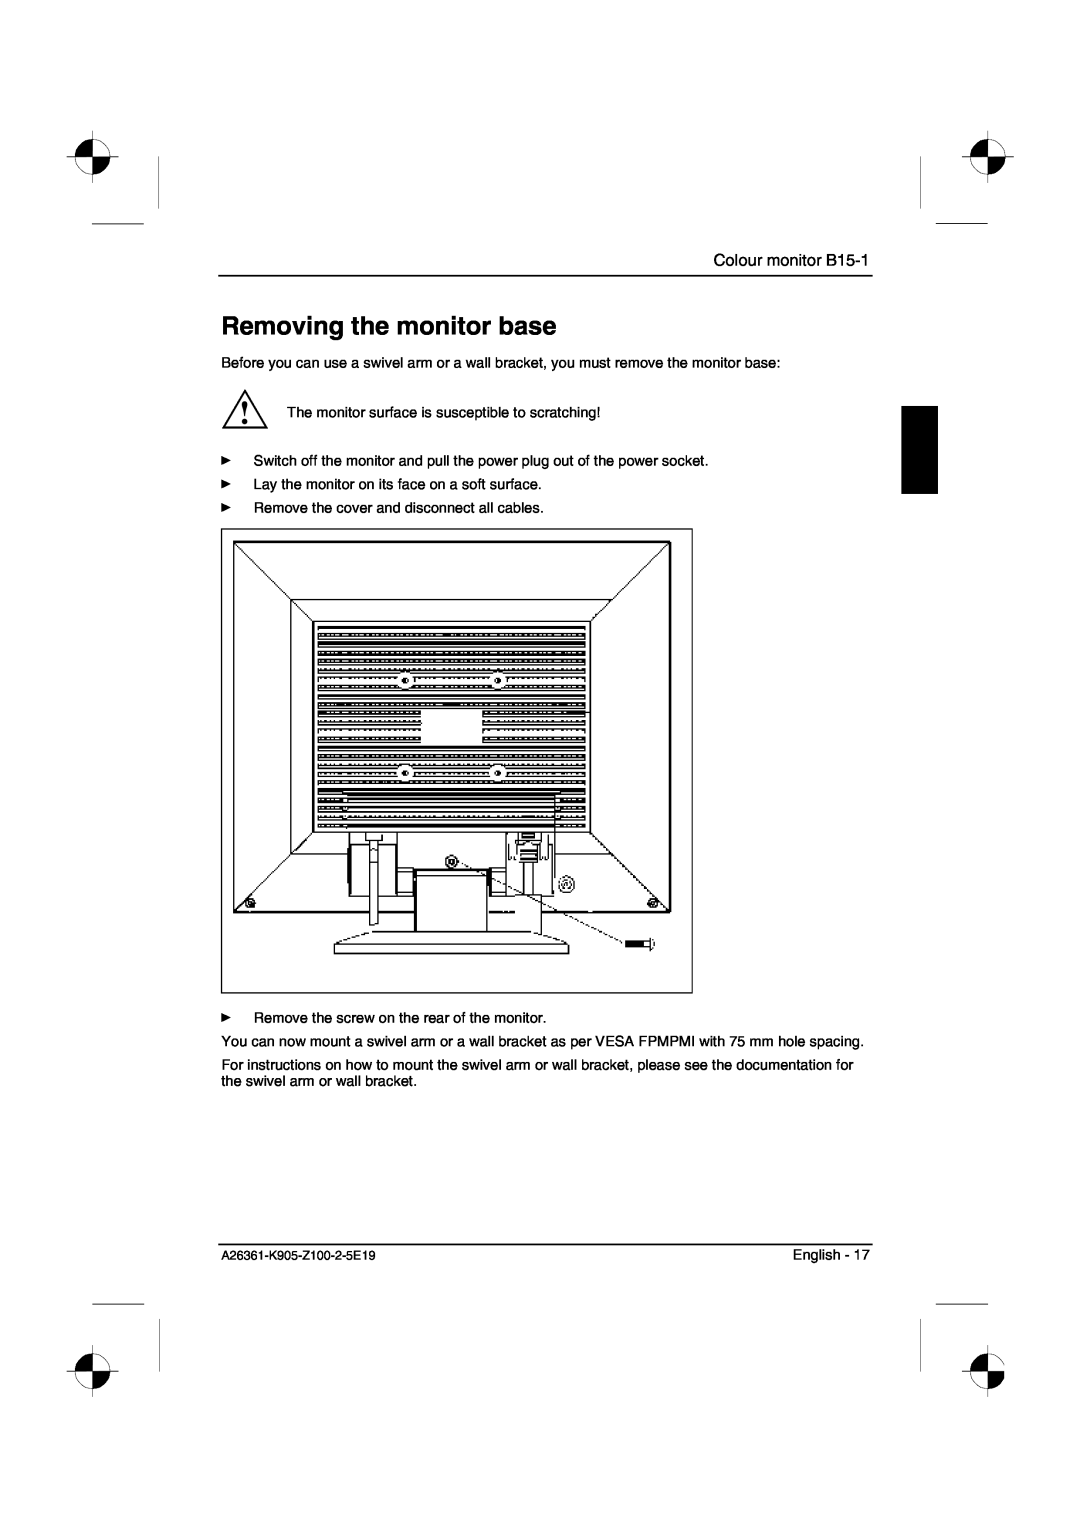 Fujitsu Siemens Computers manual Removing the monitor base, Colour monitor B15-1 